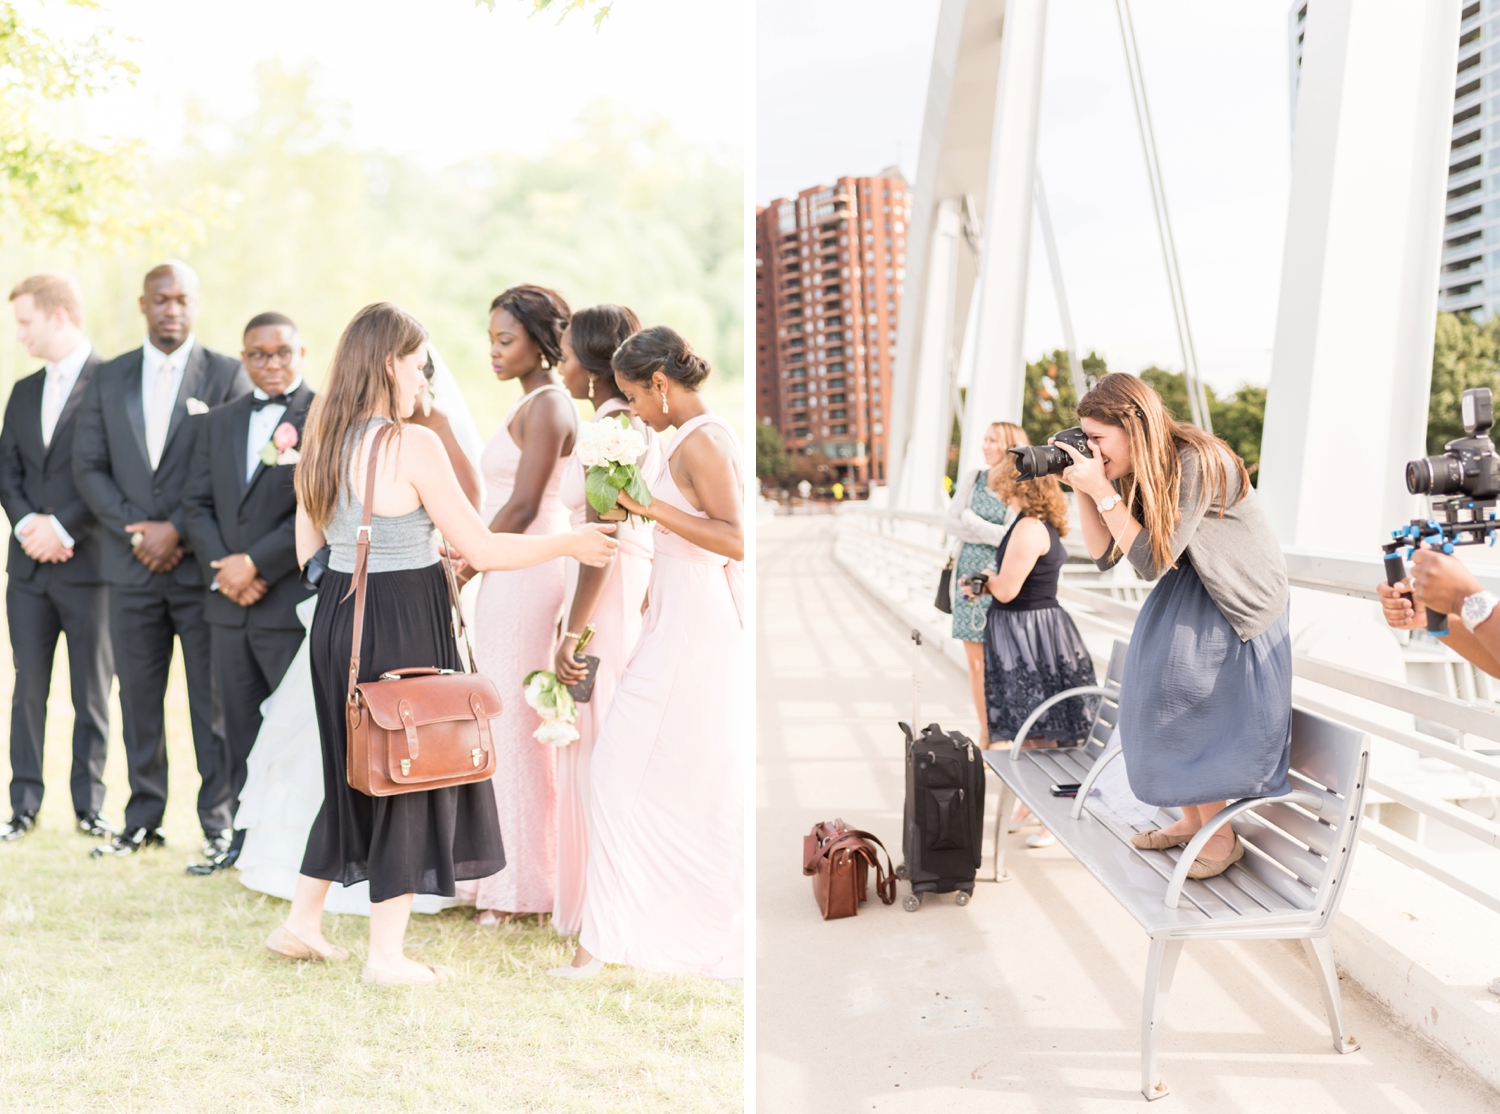 behind-the-scenes-of-a-wedding-photographer-stephanie-brann-photography_0113